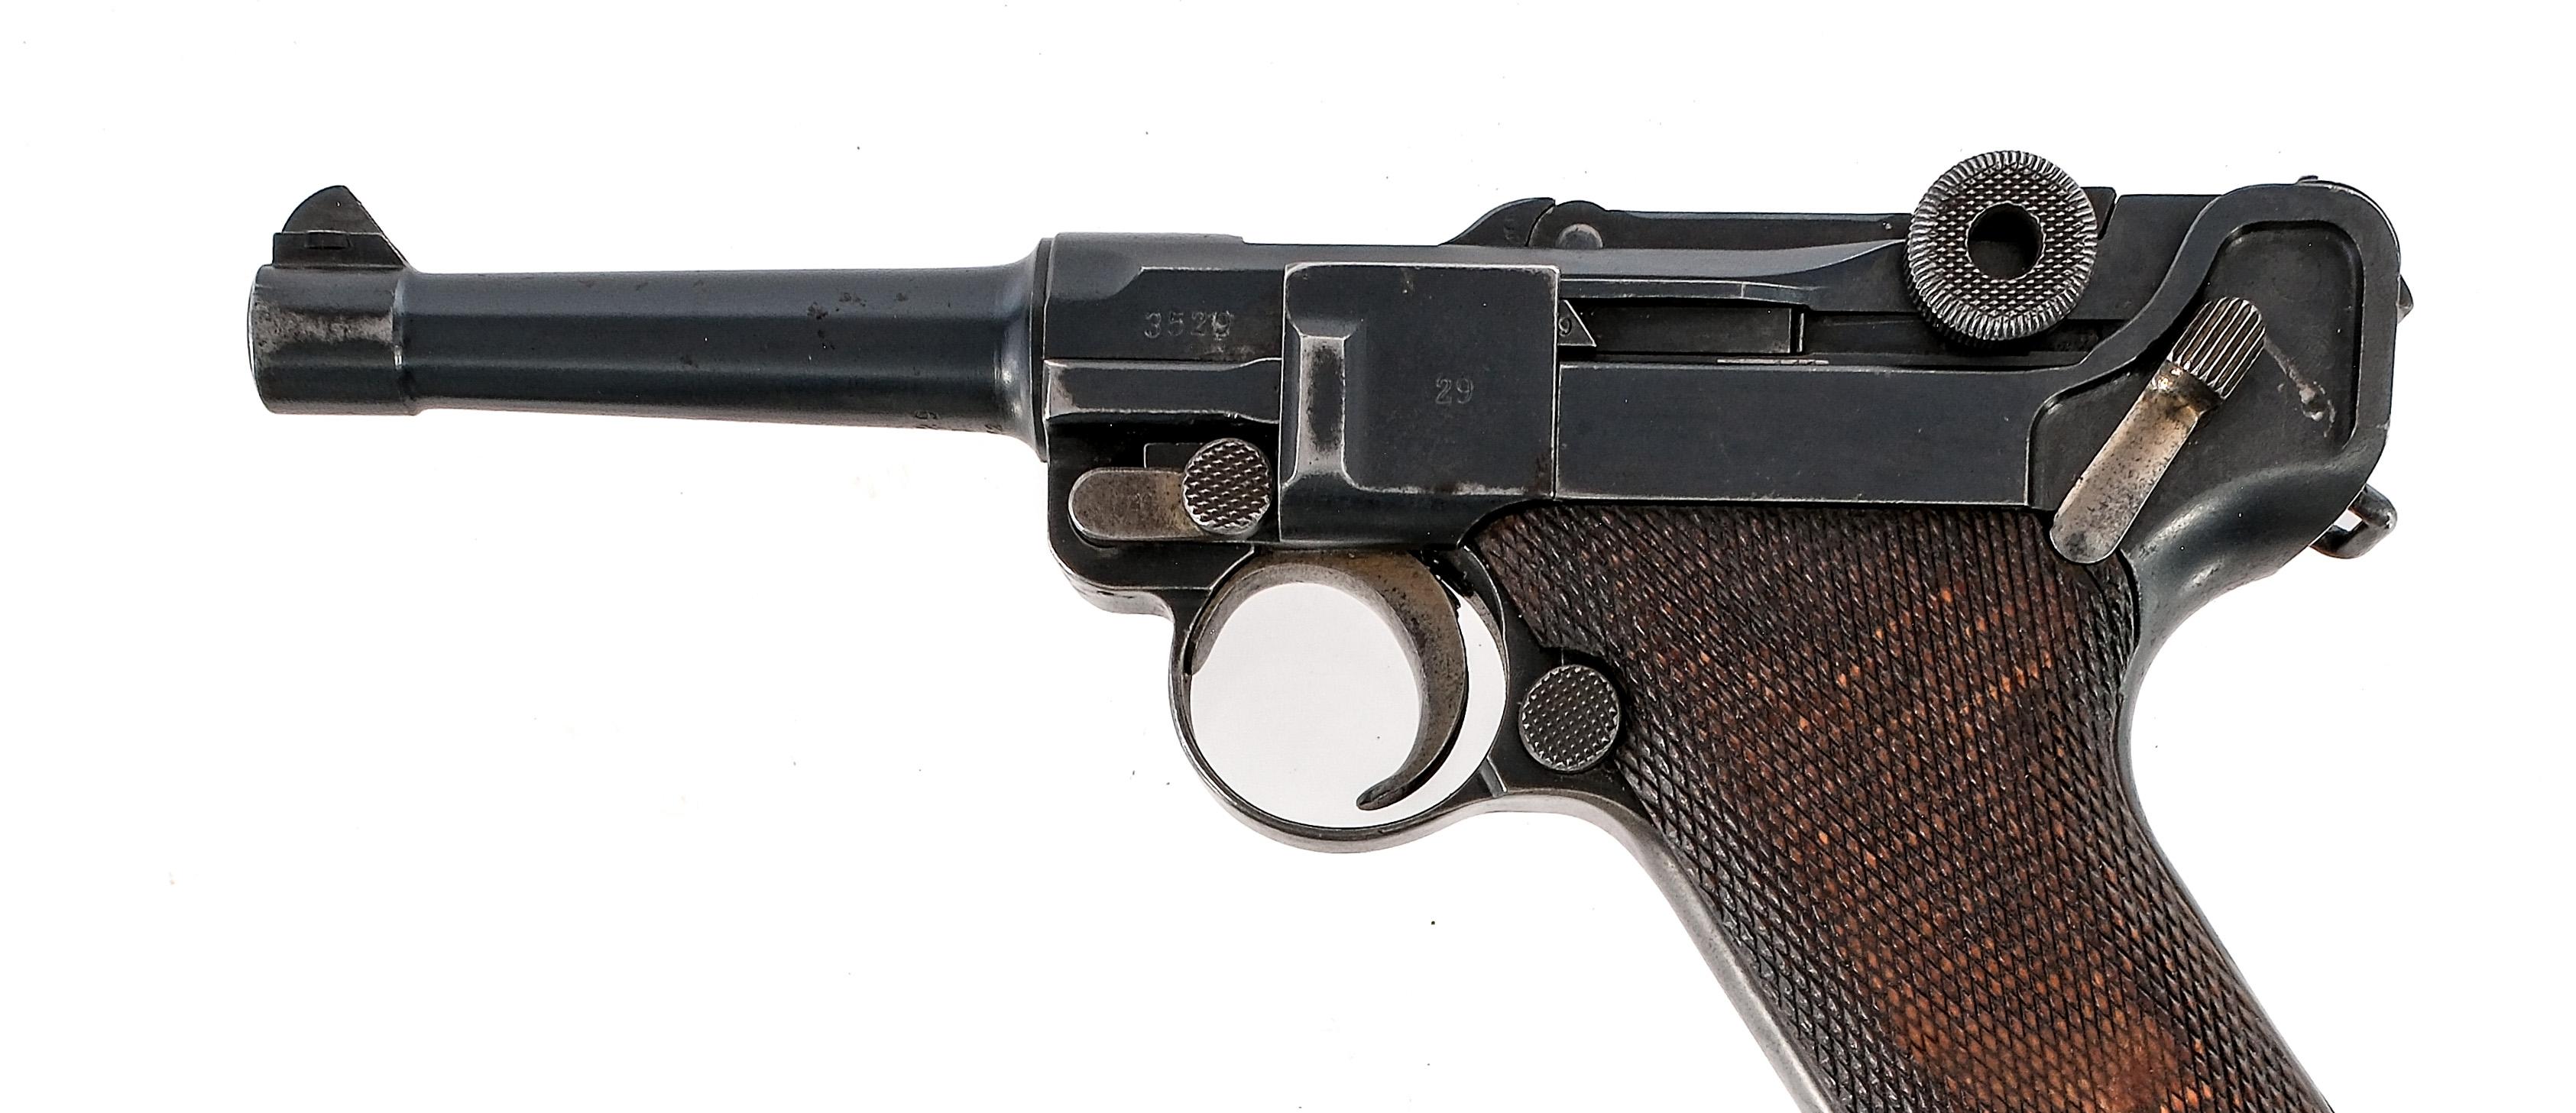 DWM 1920 Luger P08 9mm Semi Auto Pistol